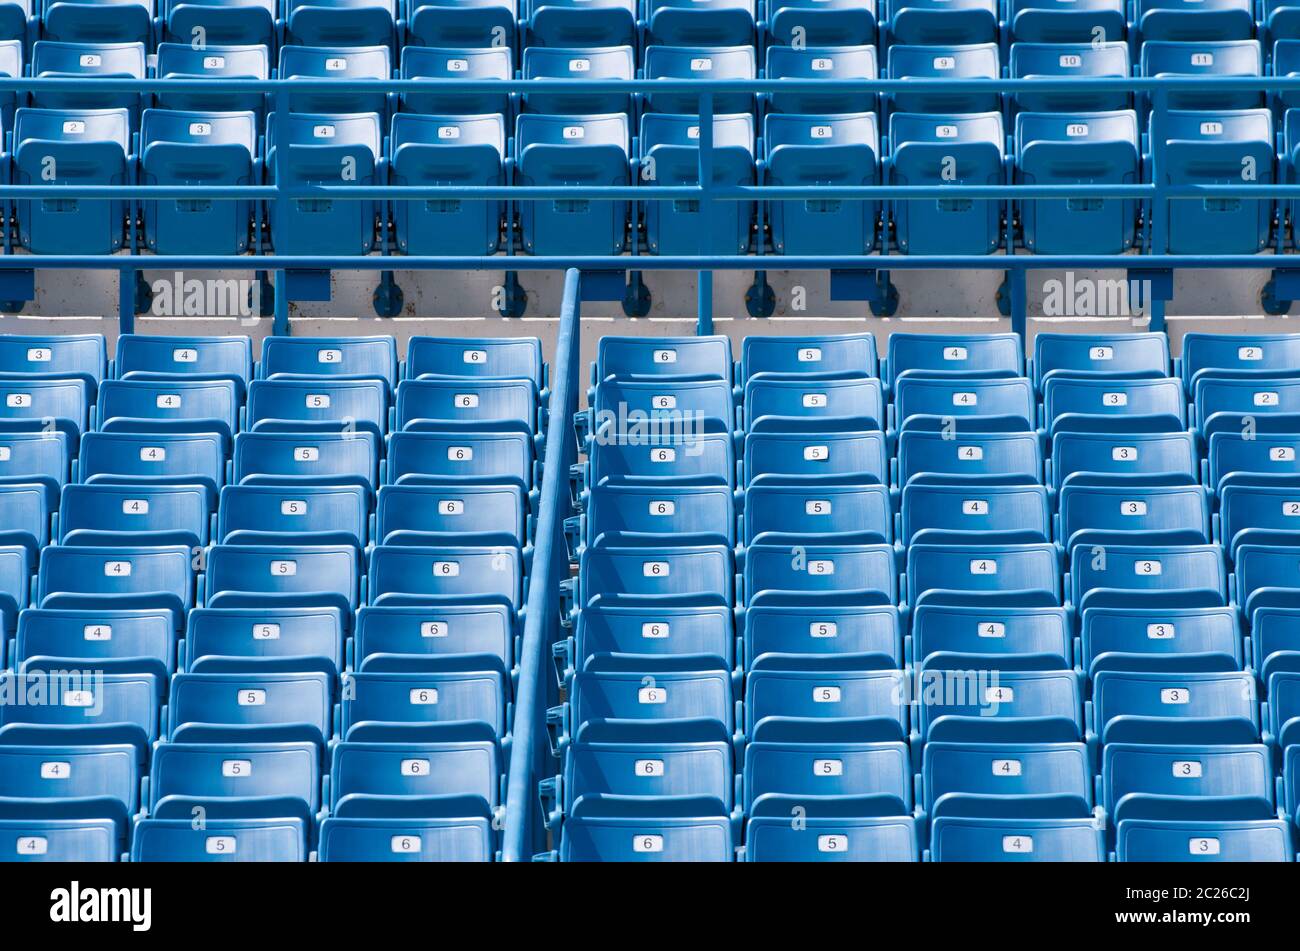 Blue seats in a sports stadium. Stock Photo